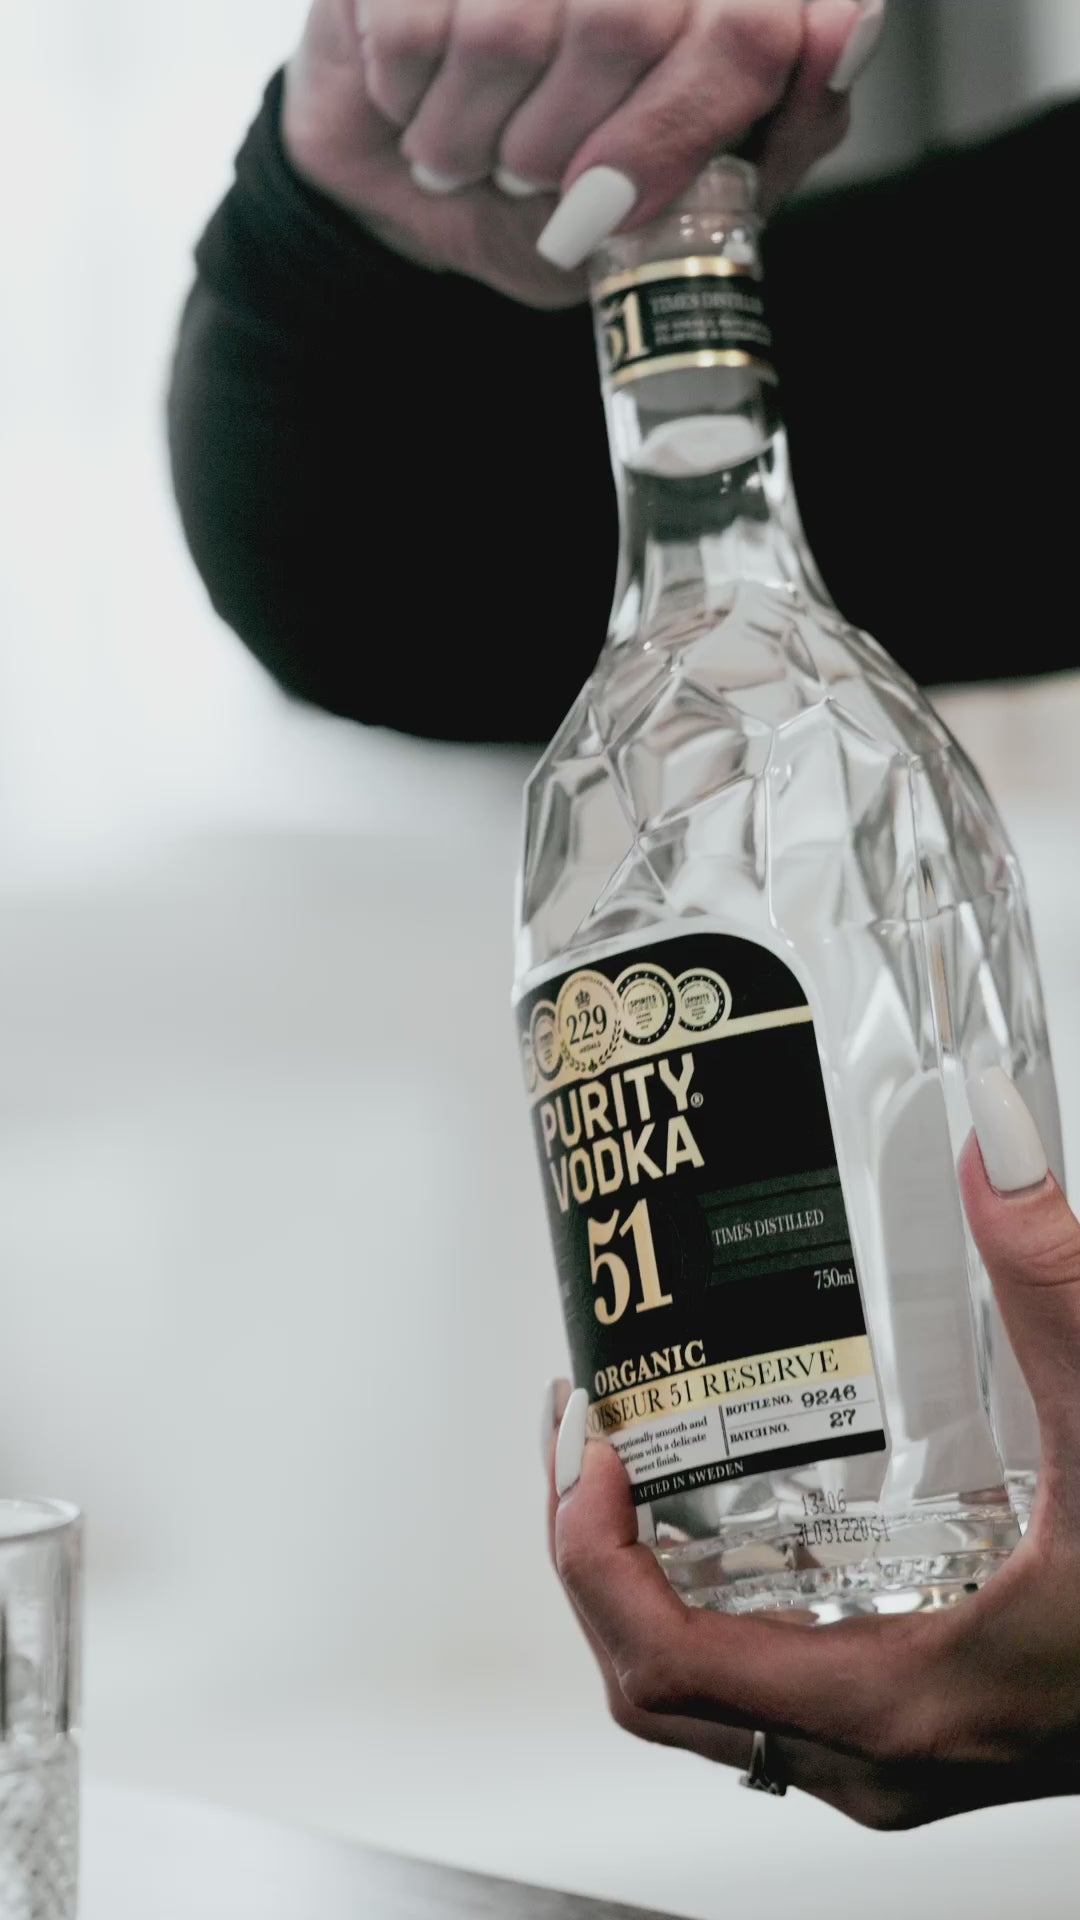 Purity Connoisseur 51 Reserve Biologische Vodka 700 ml